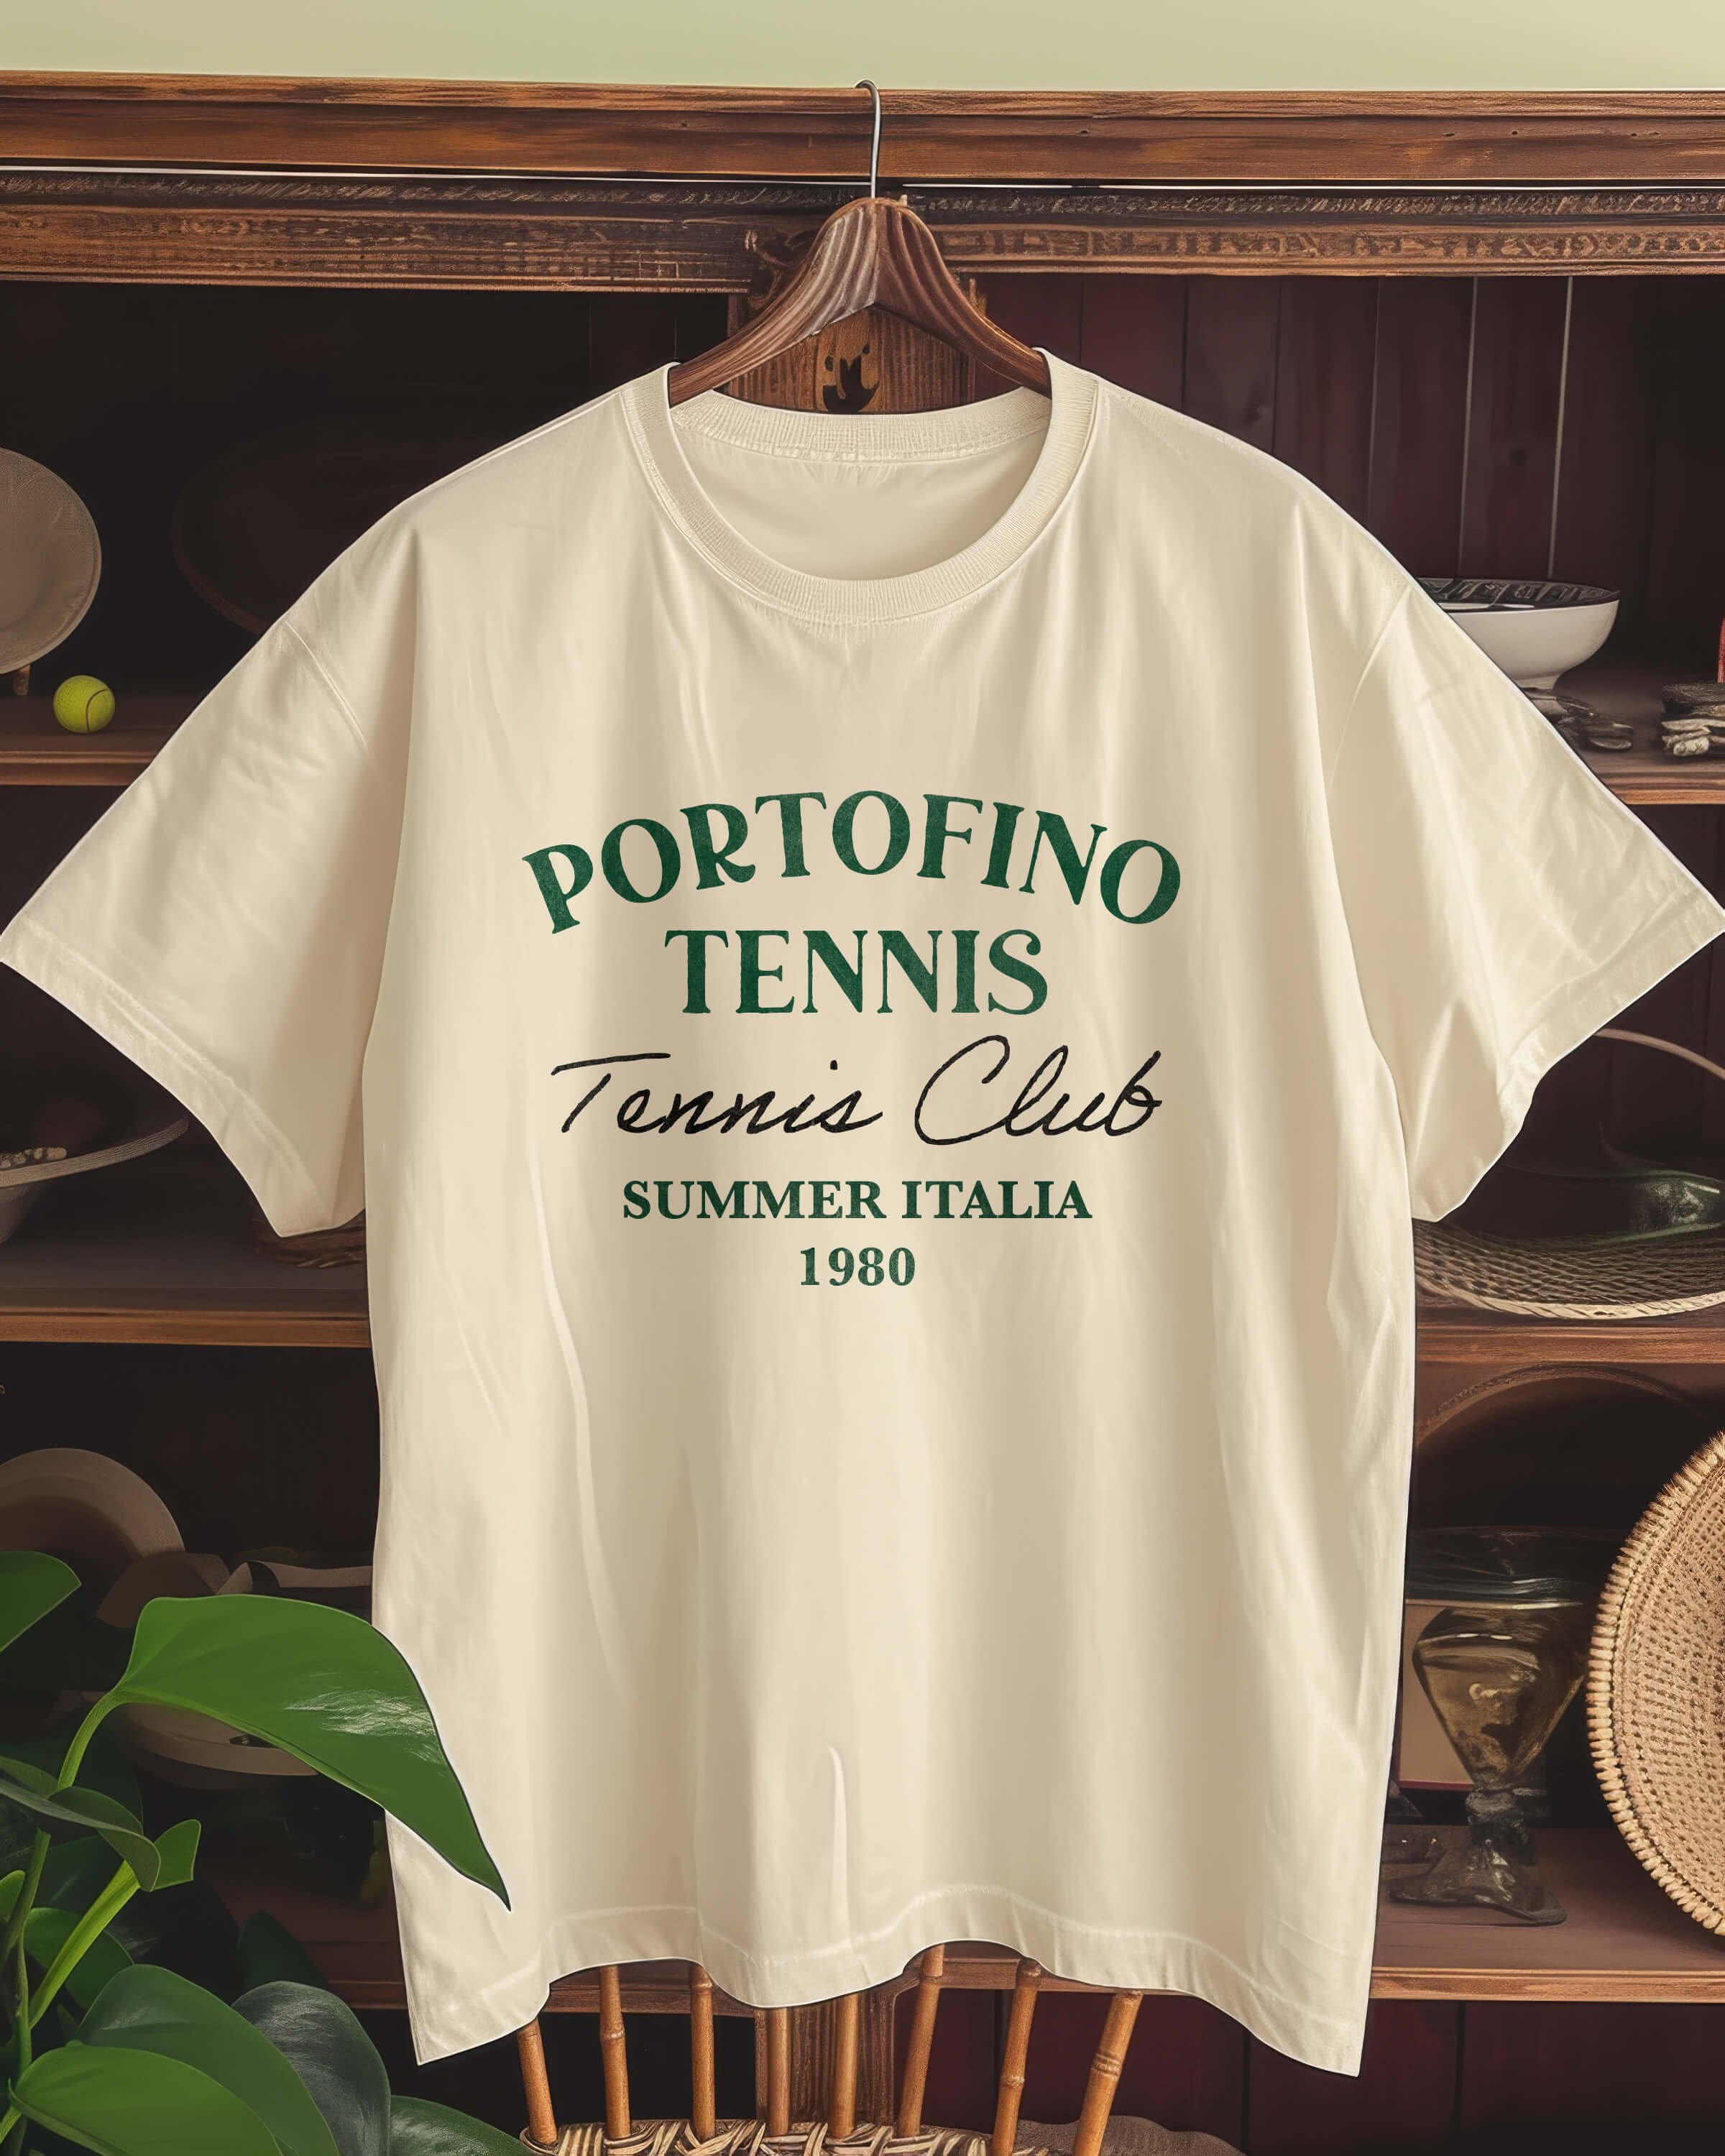 PortofinoTennisClub.jpg